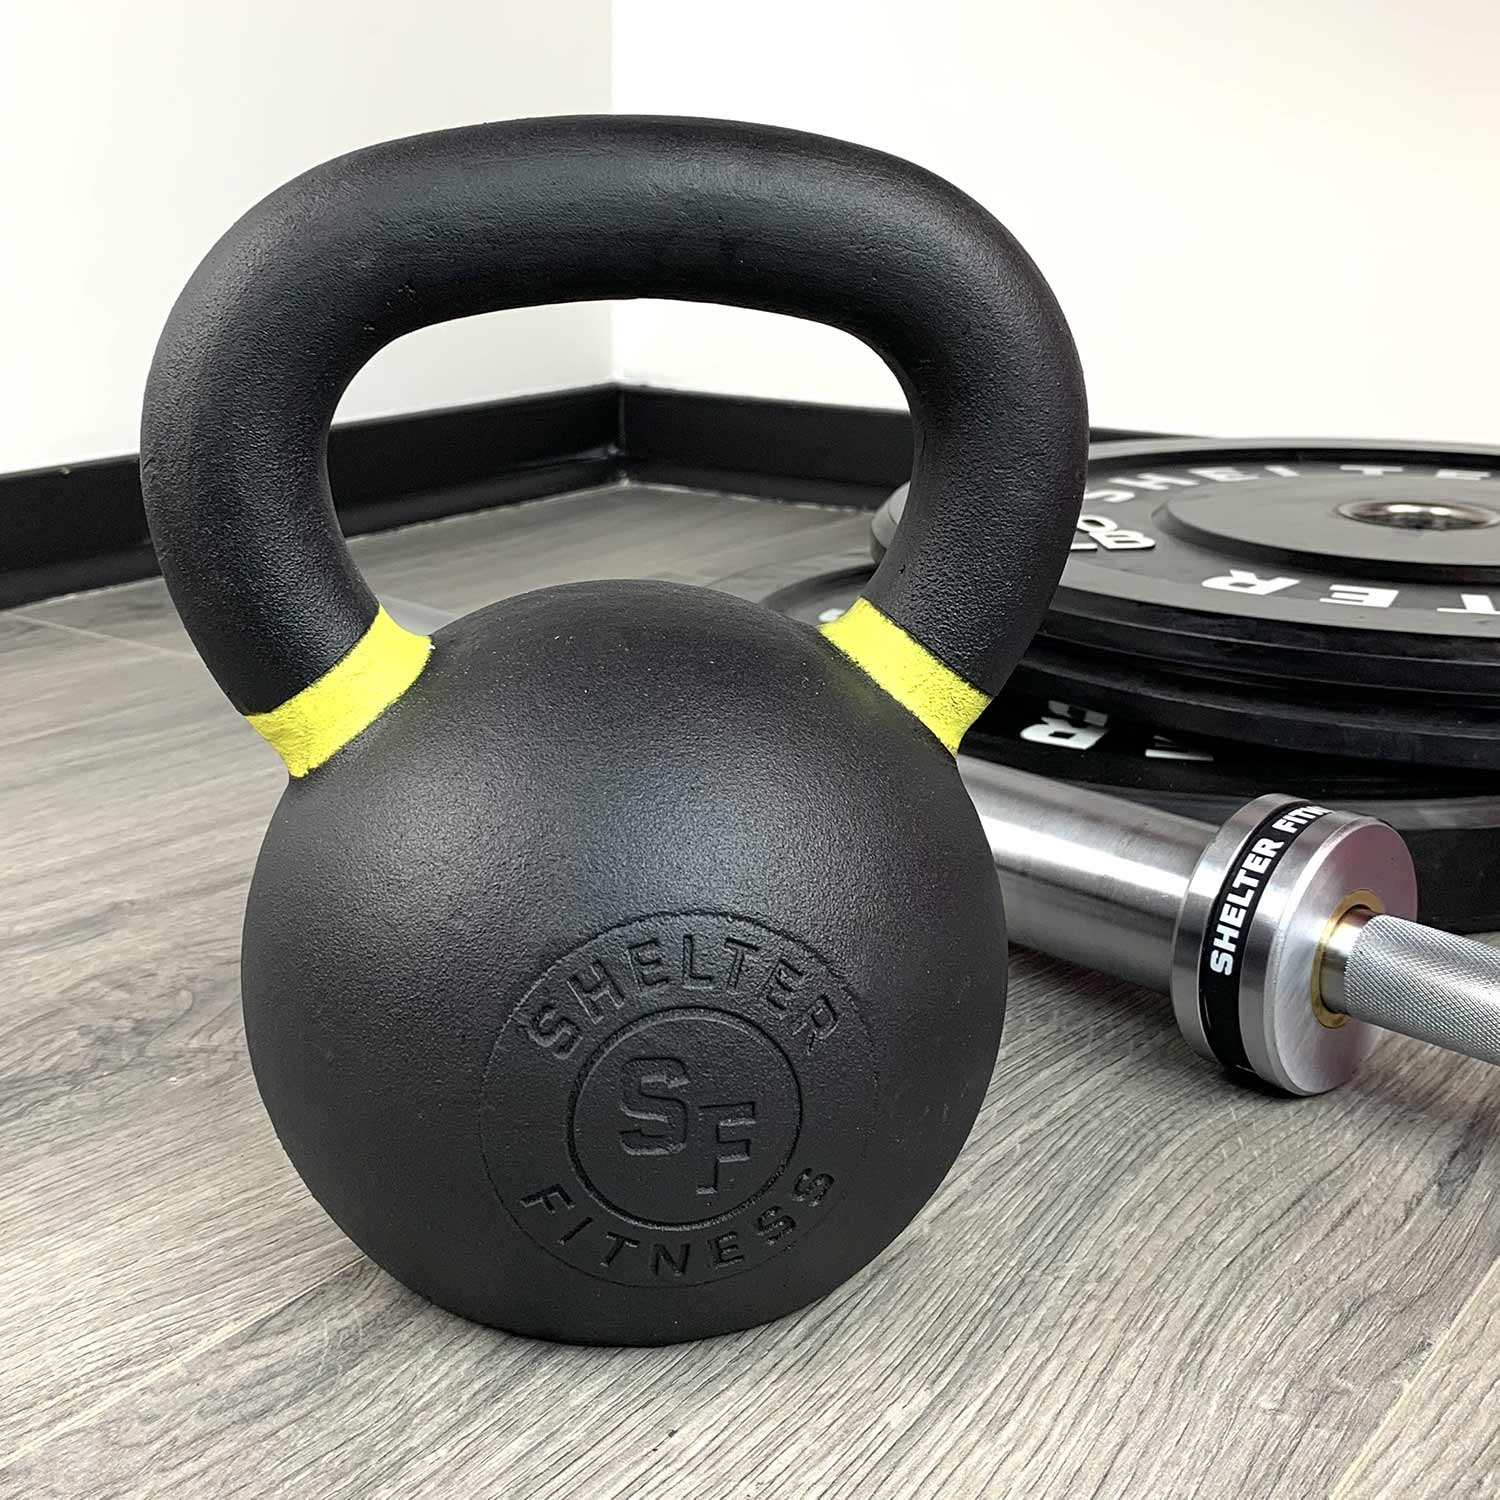 Lifelong Neoprene Cast Iron kettlebell for Gym and workout Black